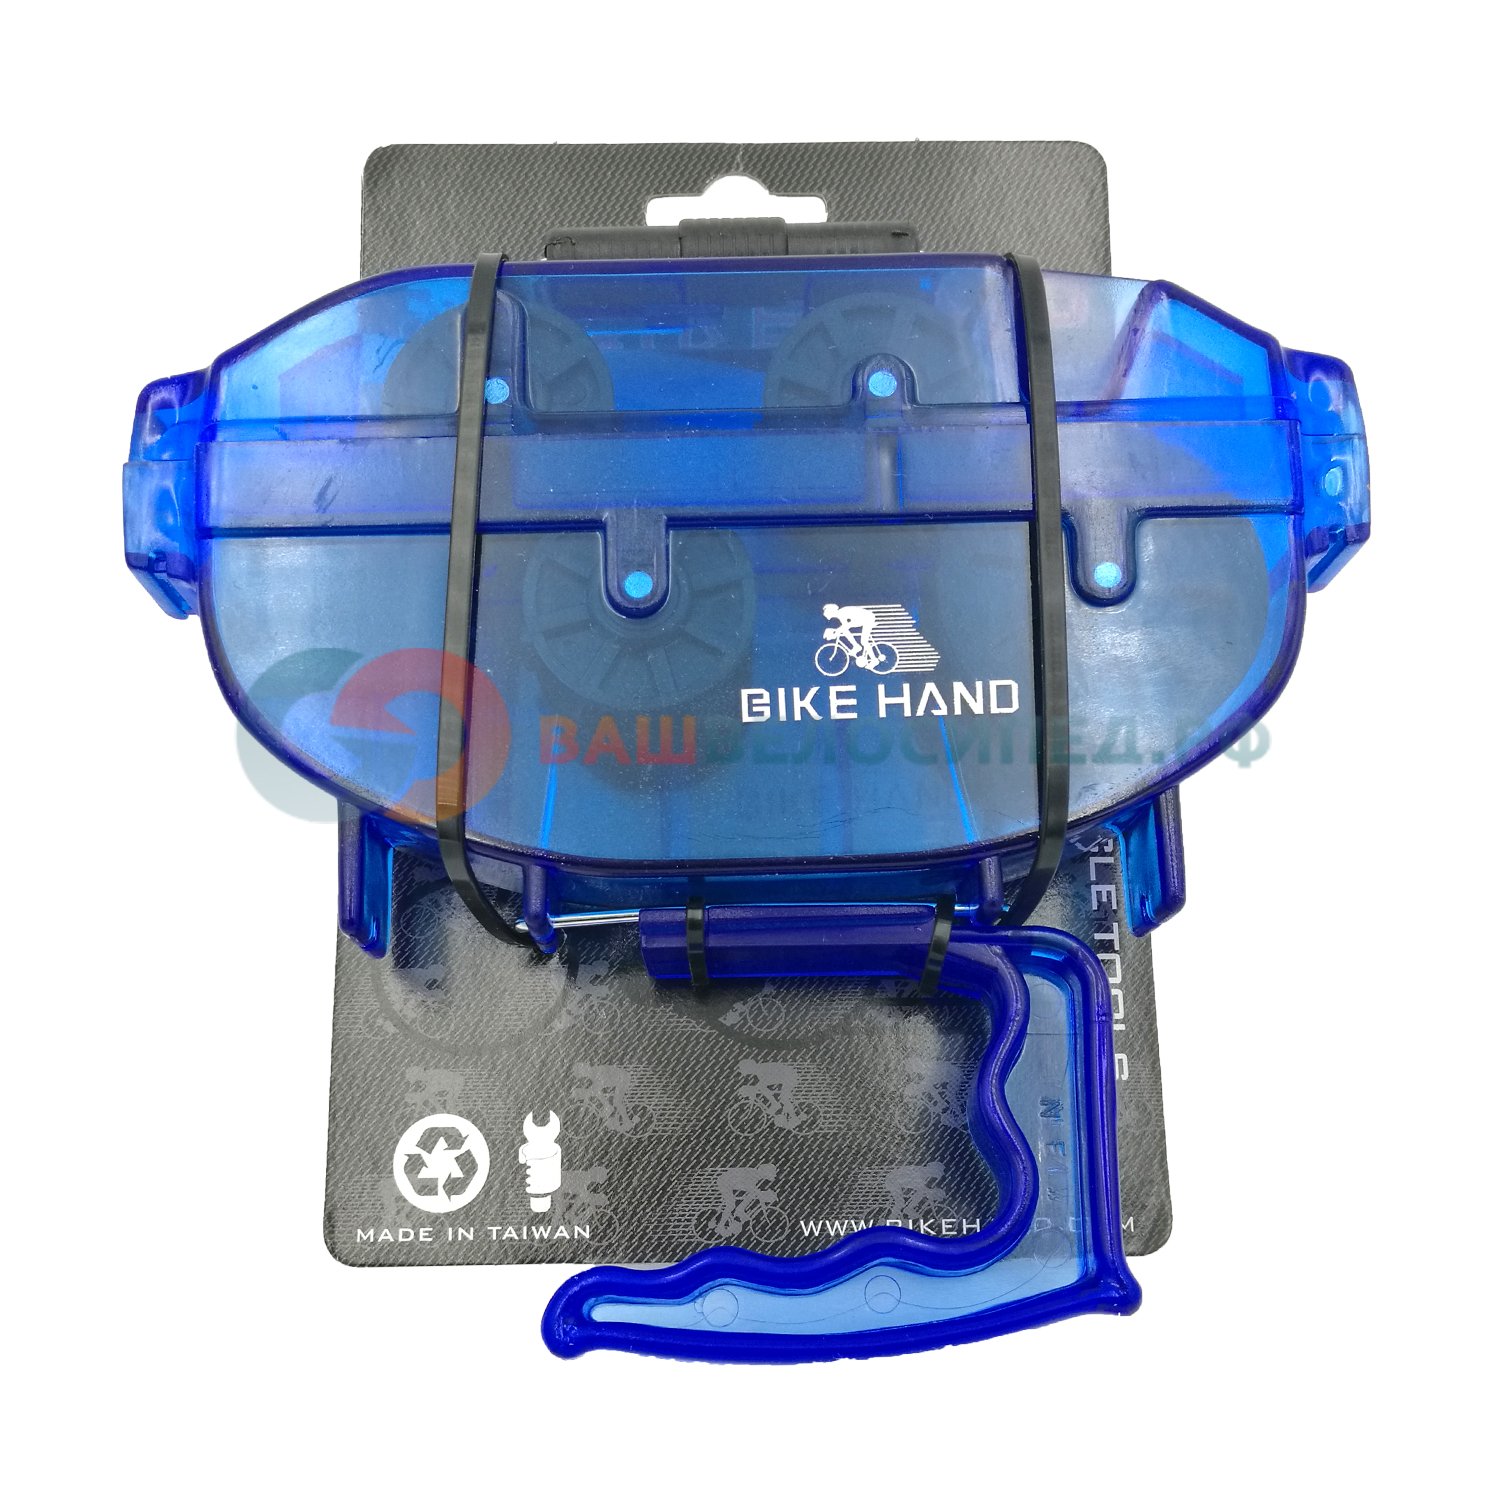 фото Машинка для чистки велосипедной цепи bikehand yc-791, в 2-х плоскостях, с рукояткой, голубая, 6-1479 bike hand